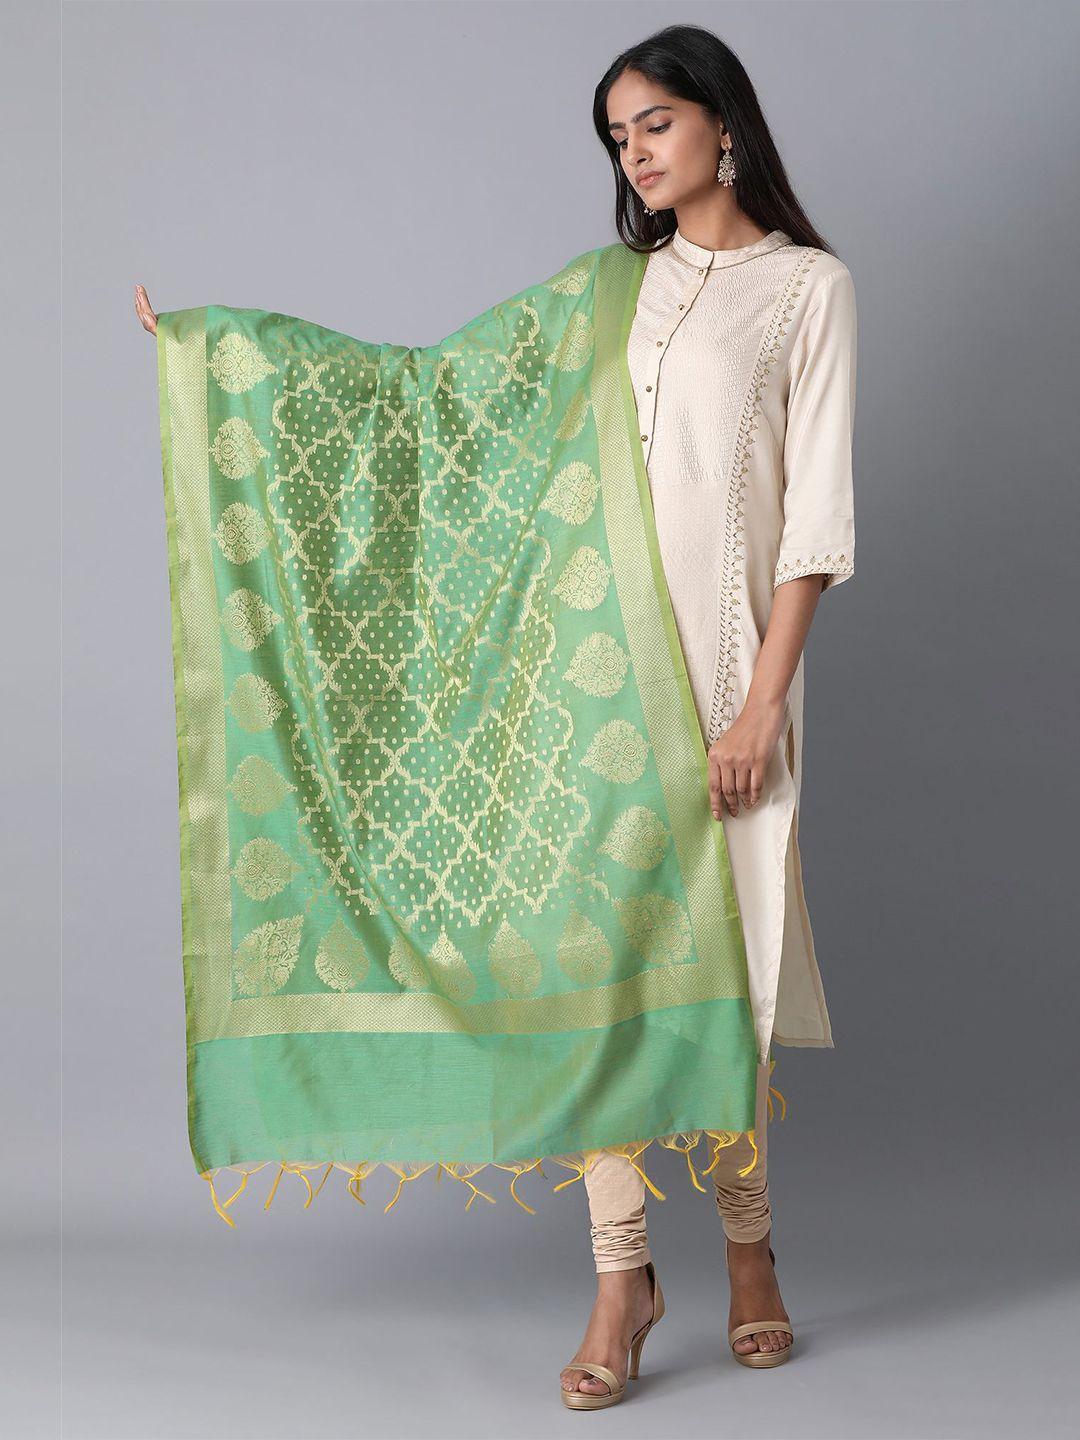 elleven green & gold-toned ethnic motifs woven design dupatta